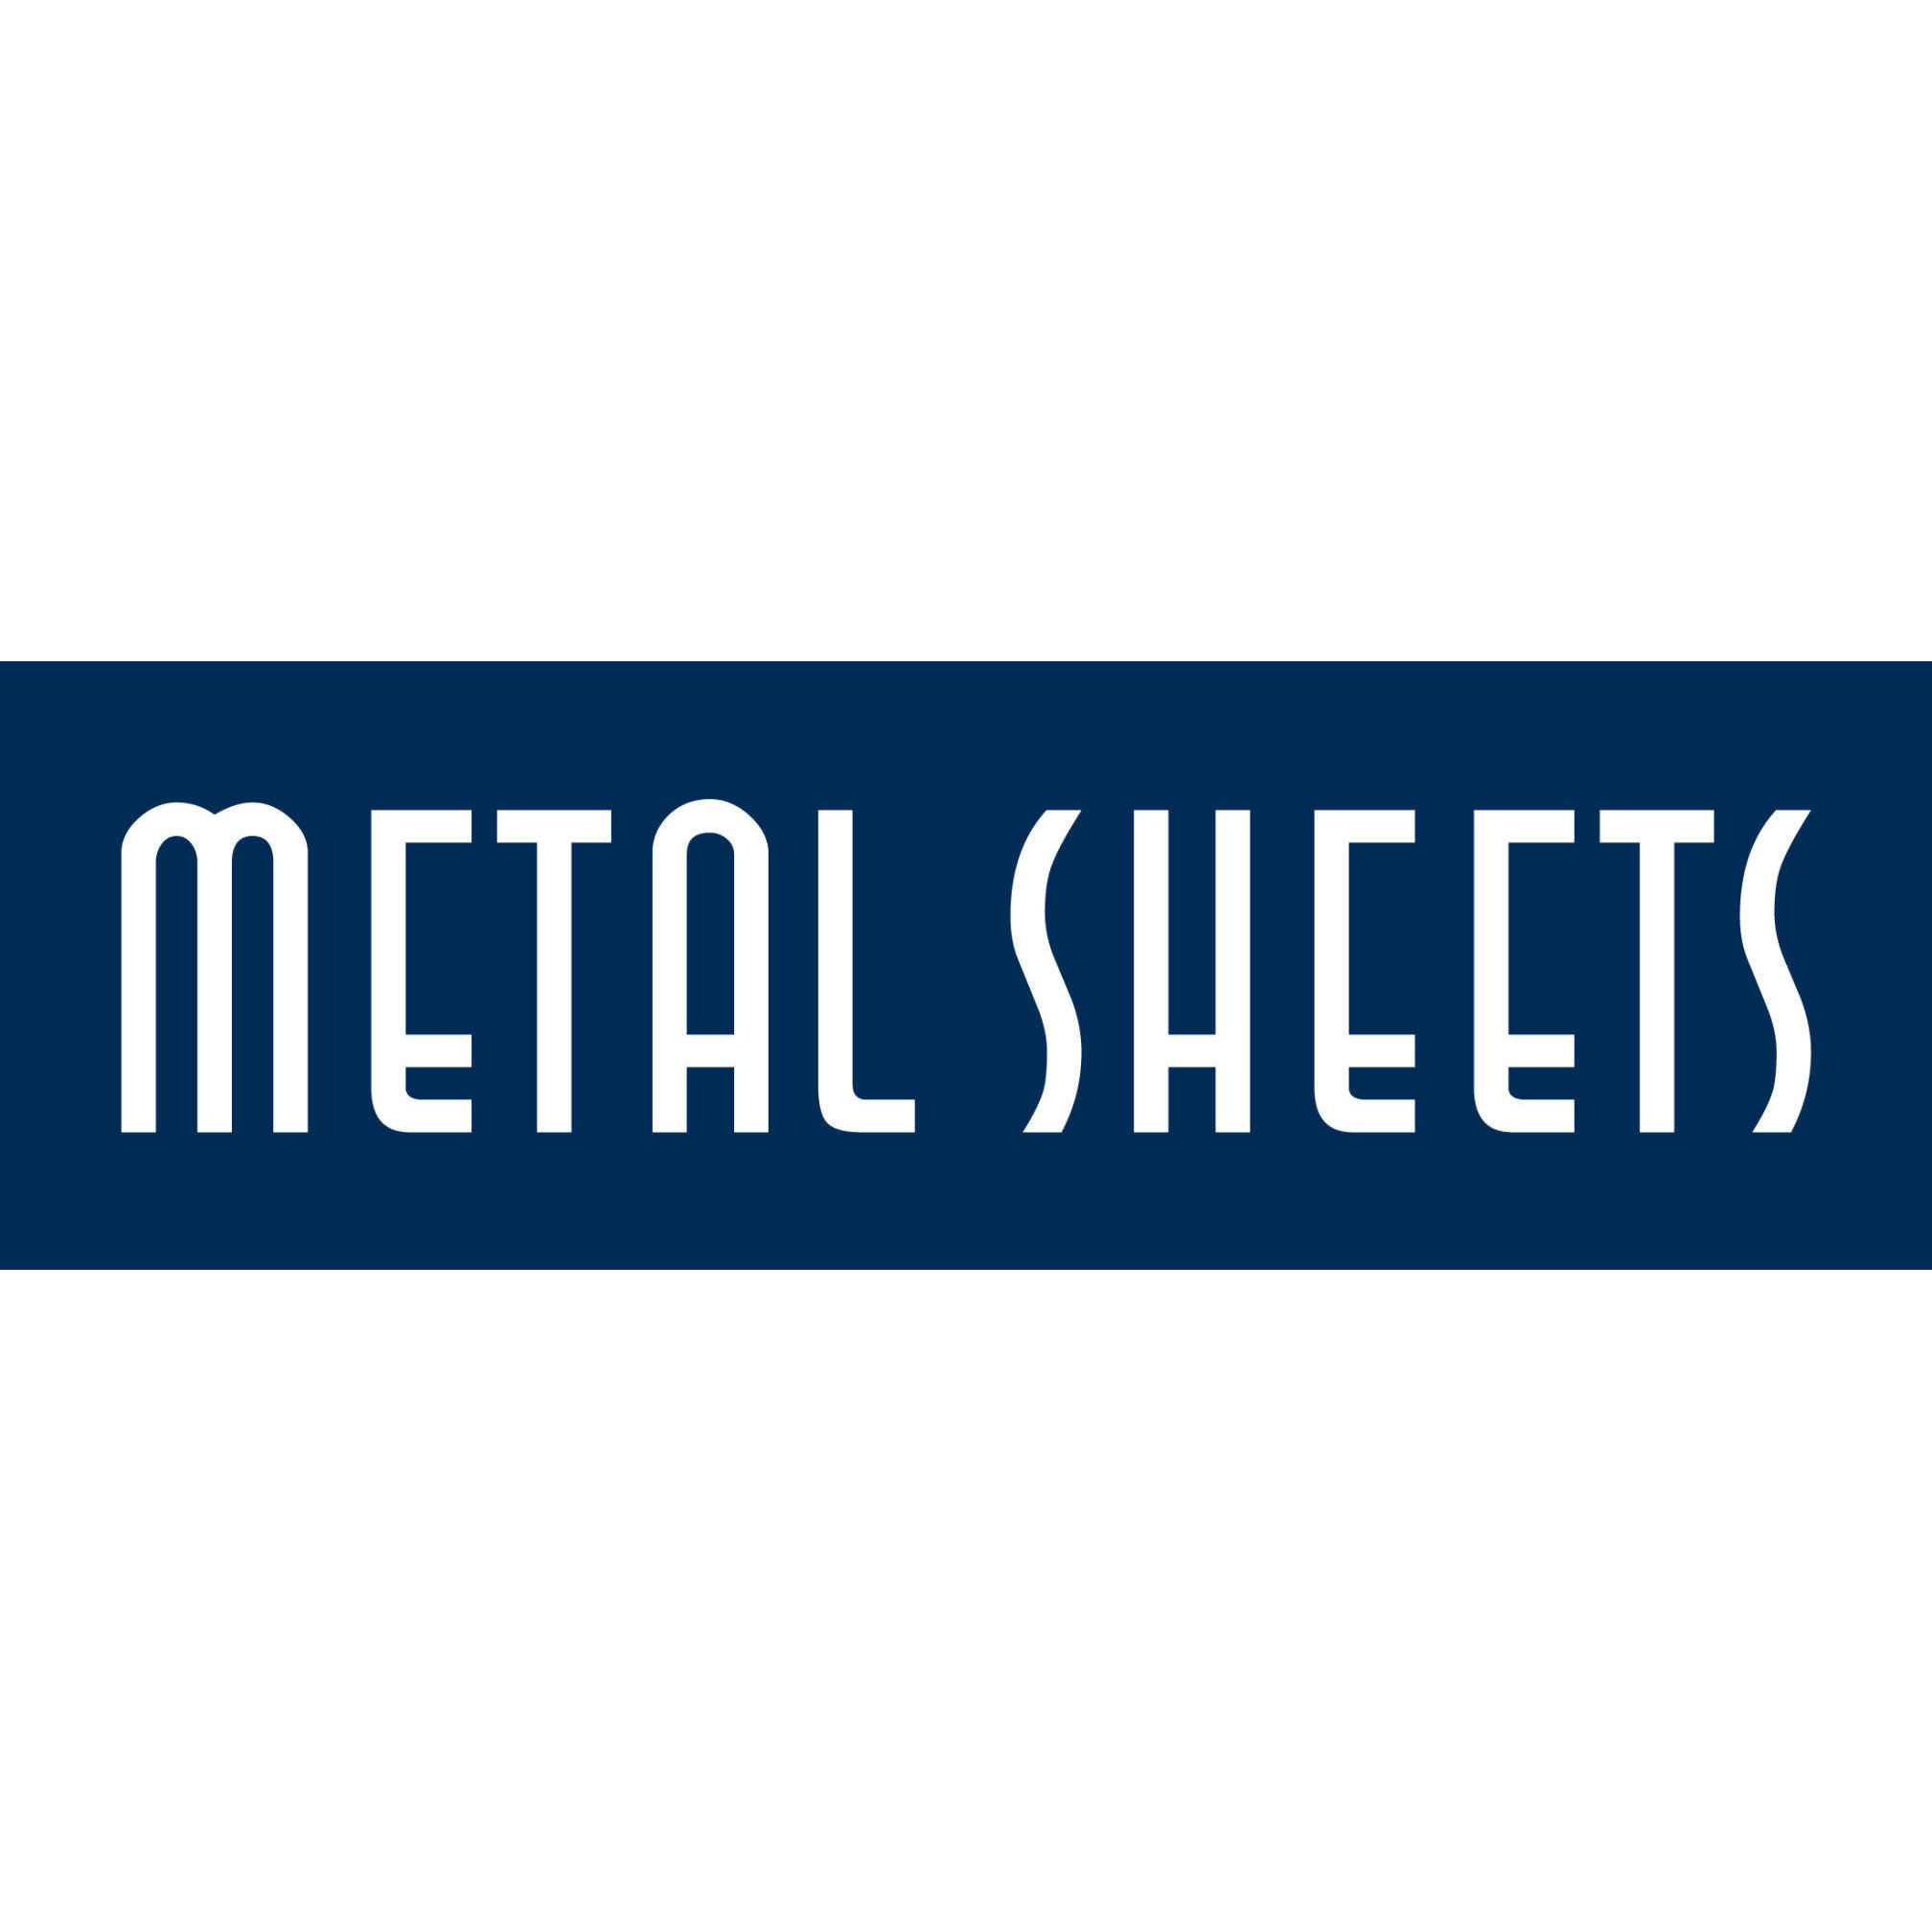 Metal Sheets Ltd - Liverpool, Merseyside L31 8BU - 01515 264777 | ShowMeLocal.com